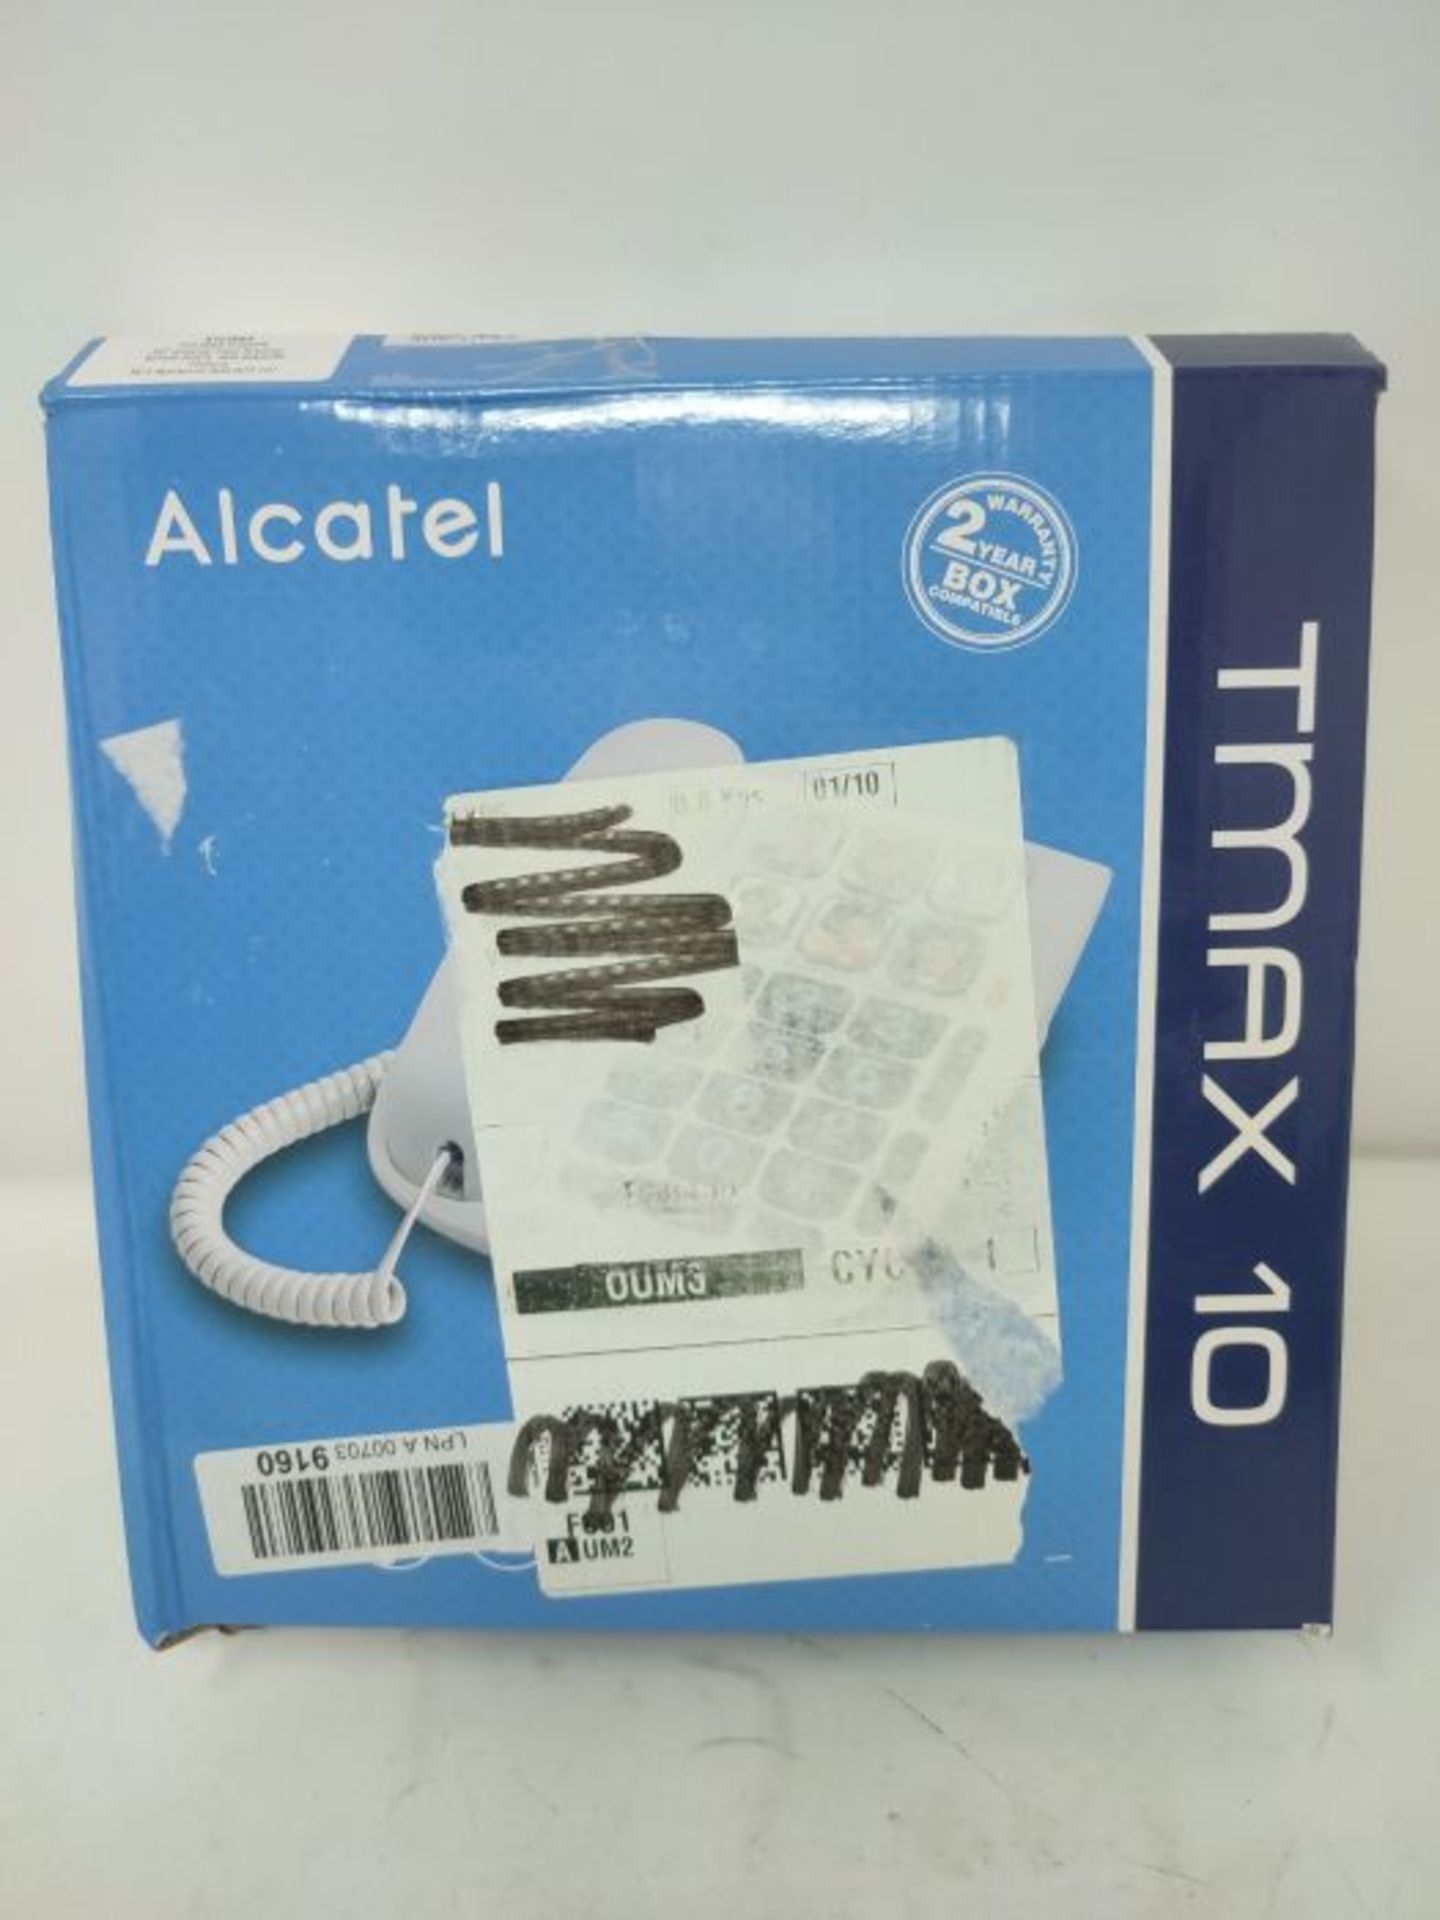 Alcatel Max 10 Corded Phone for Seniors White. - Image 5 of 6